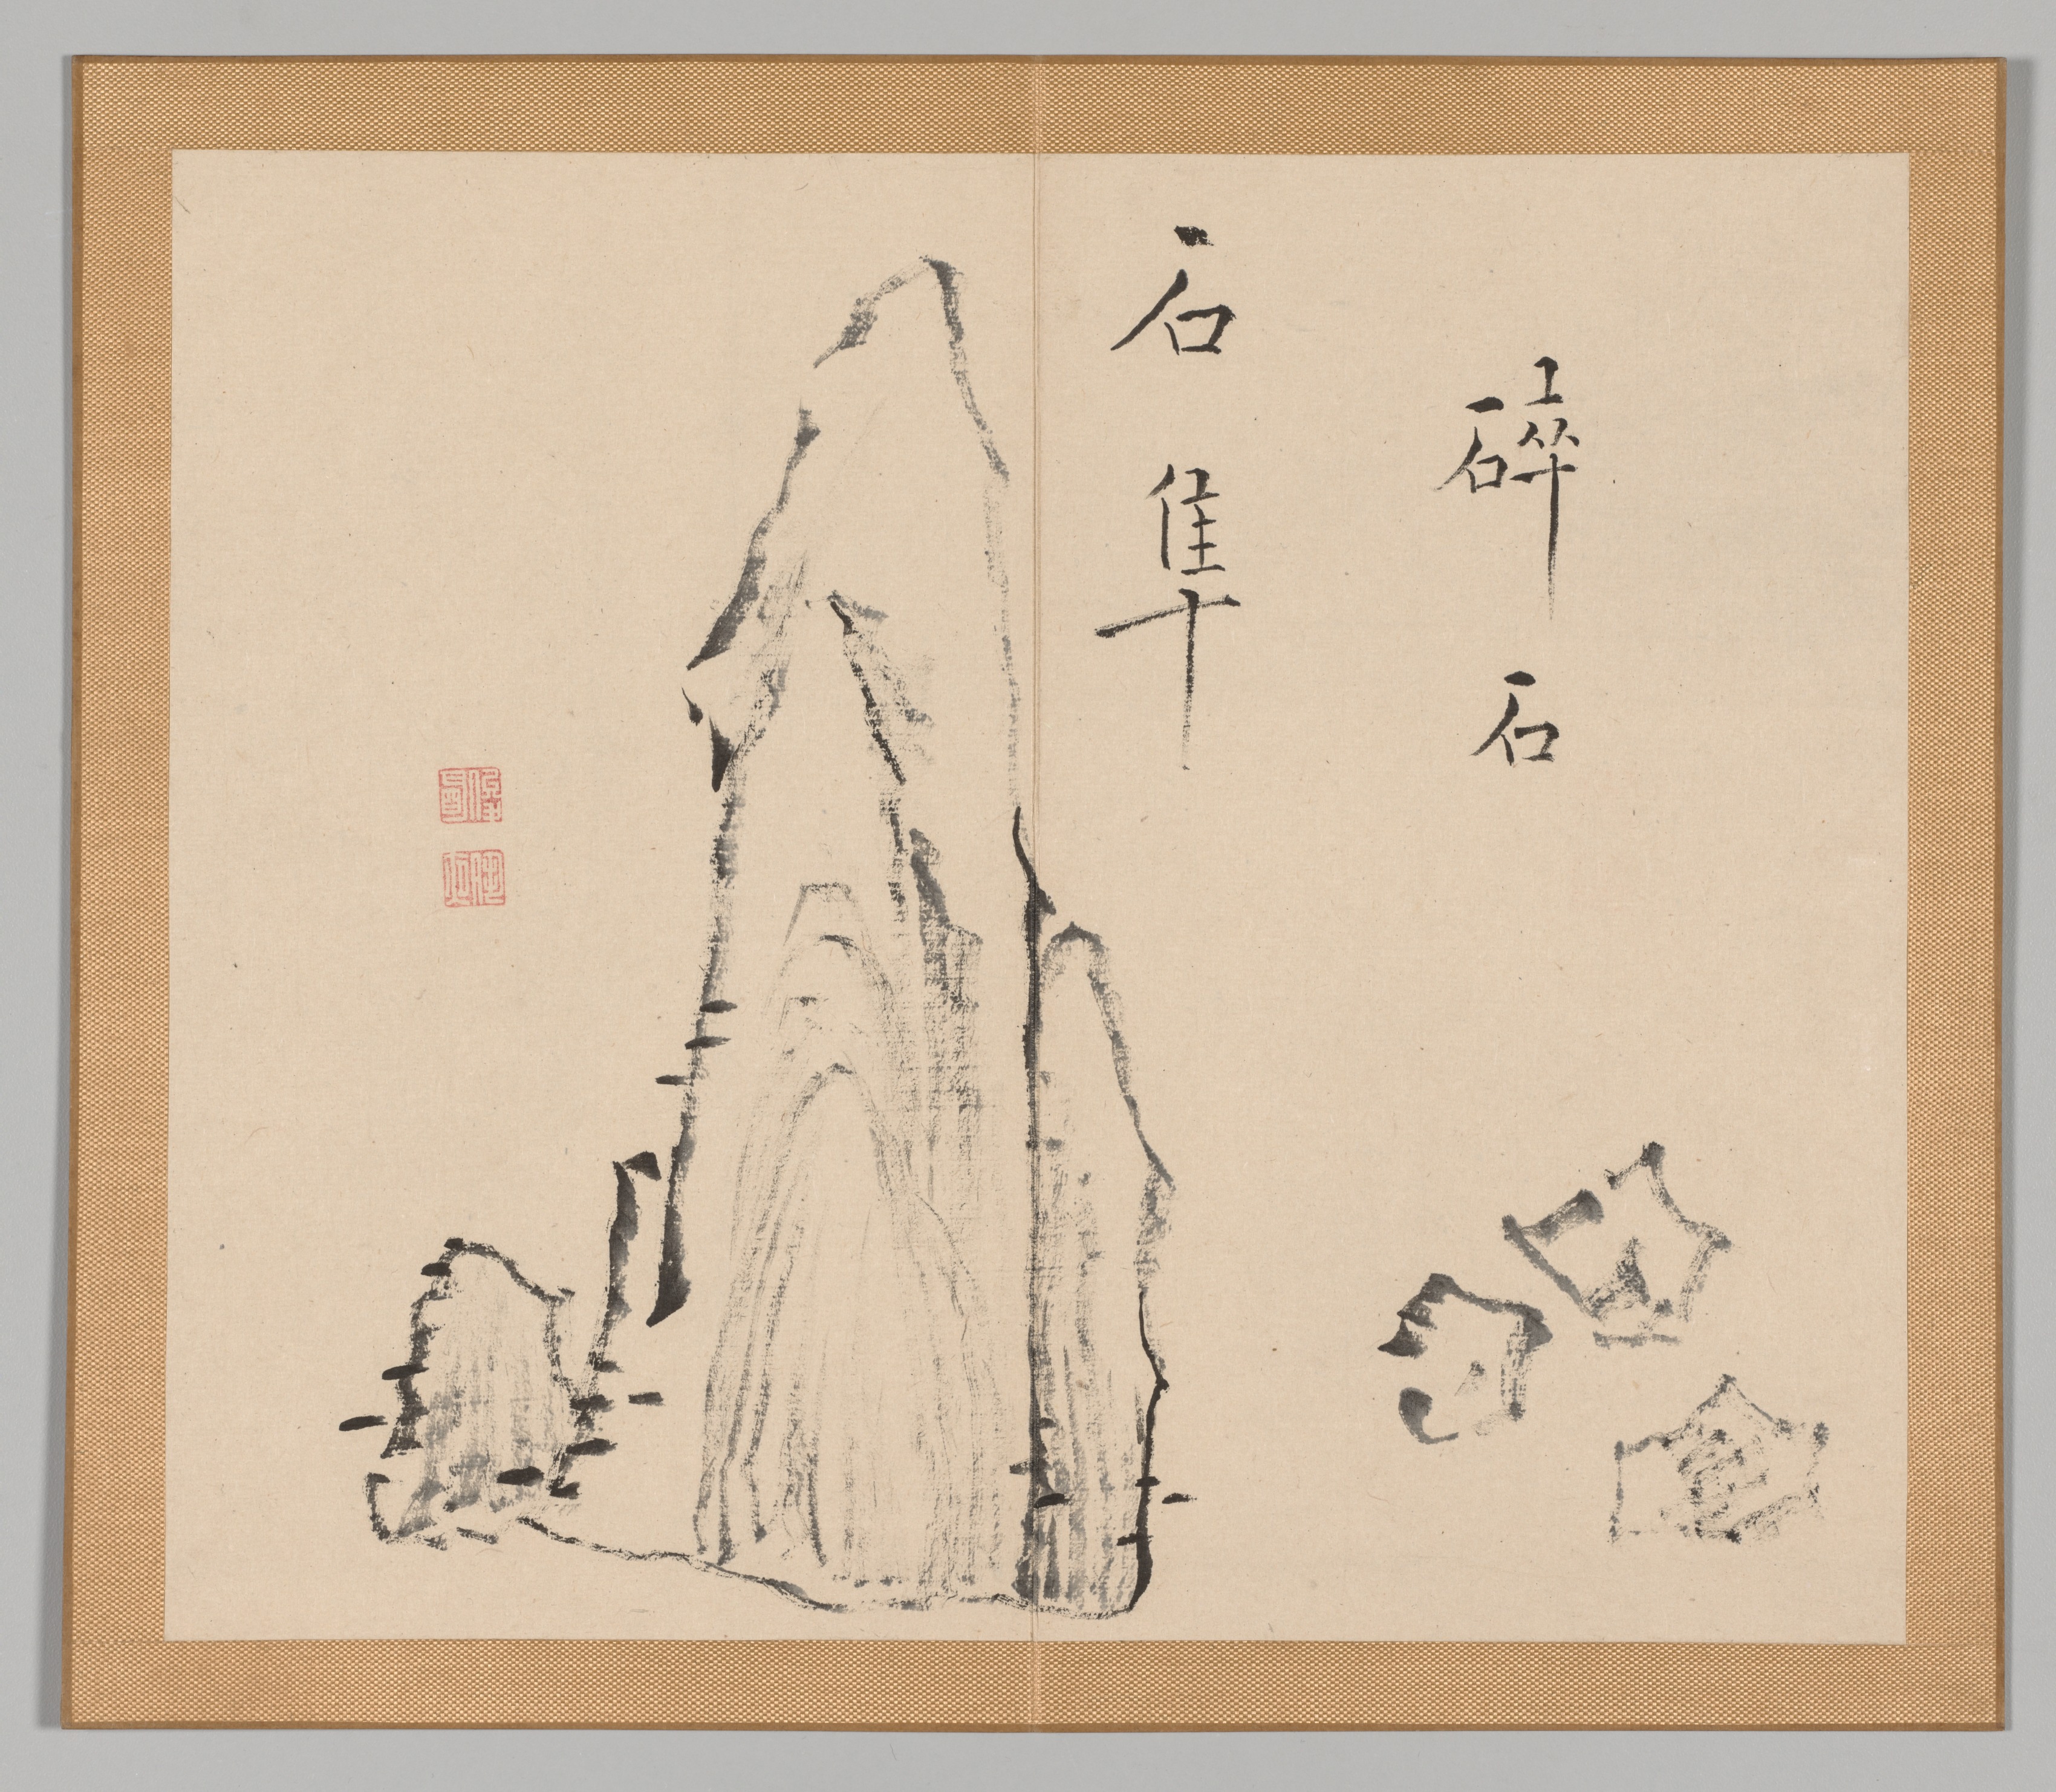 Reverberations of Taiga, Volume 1 (leaf 18)